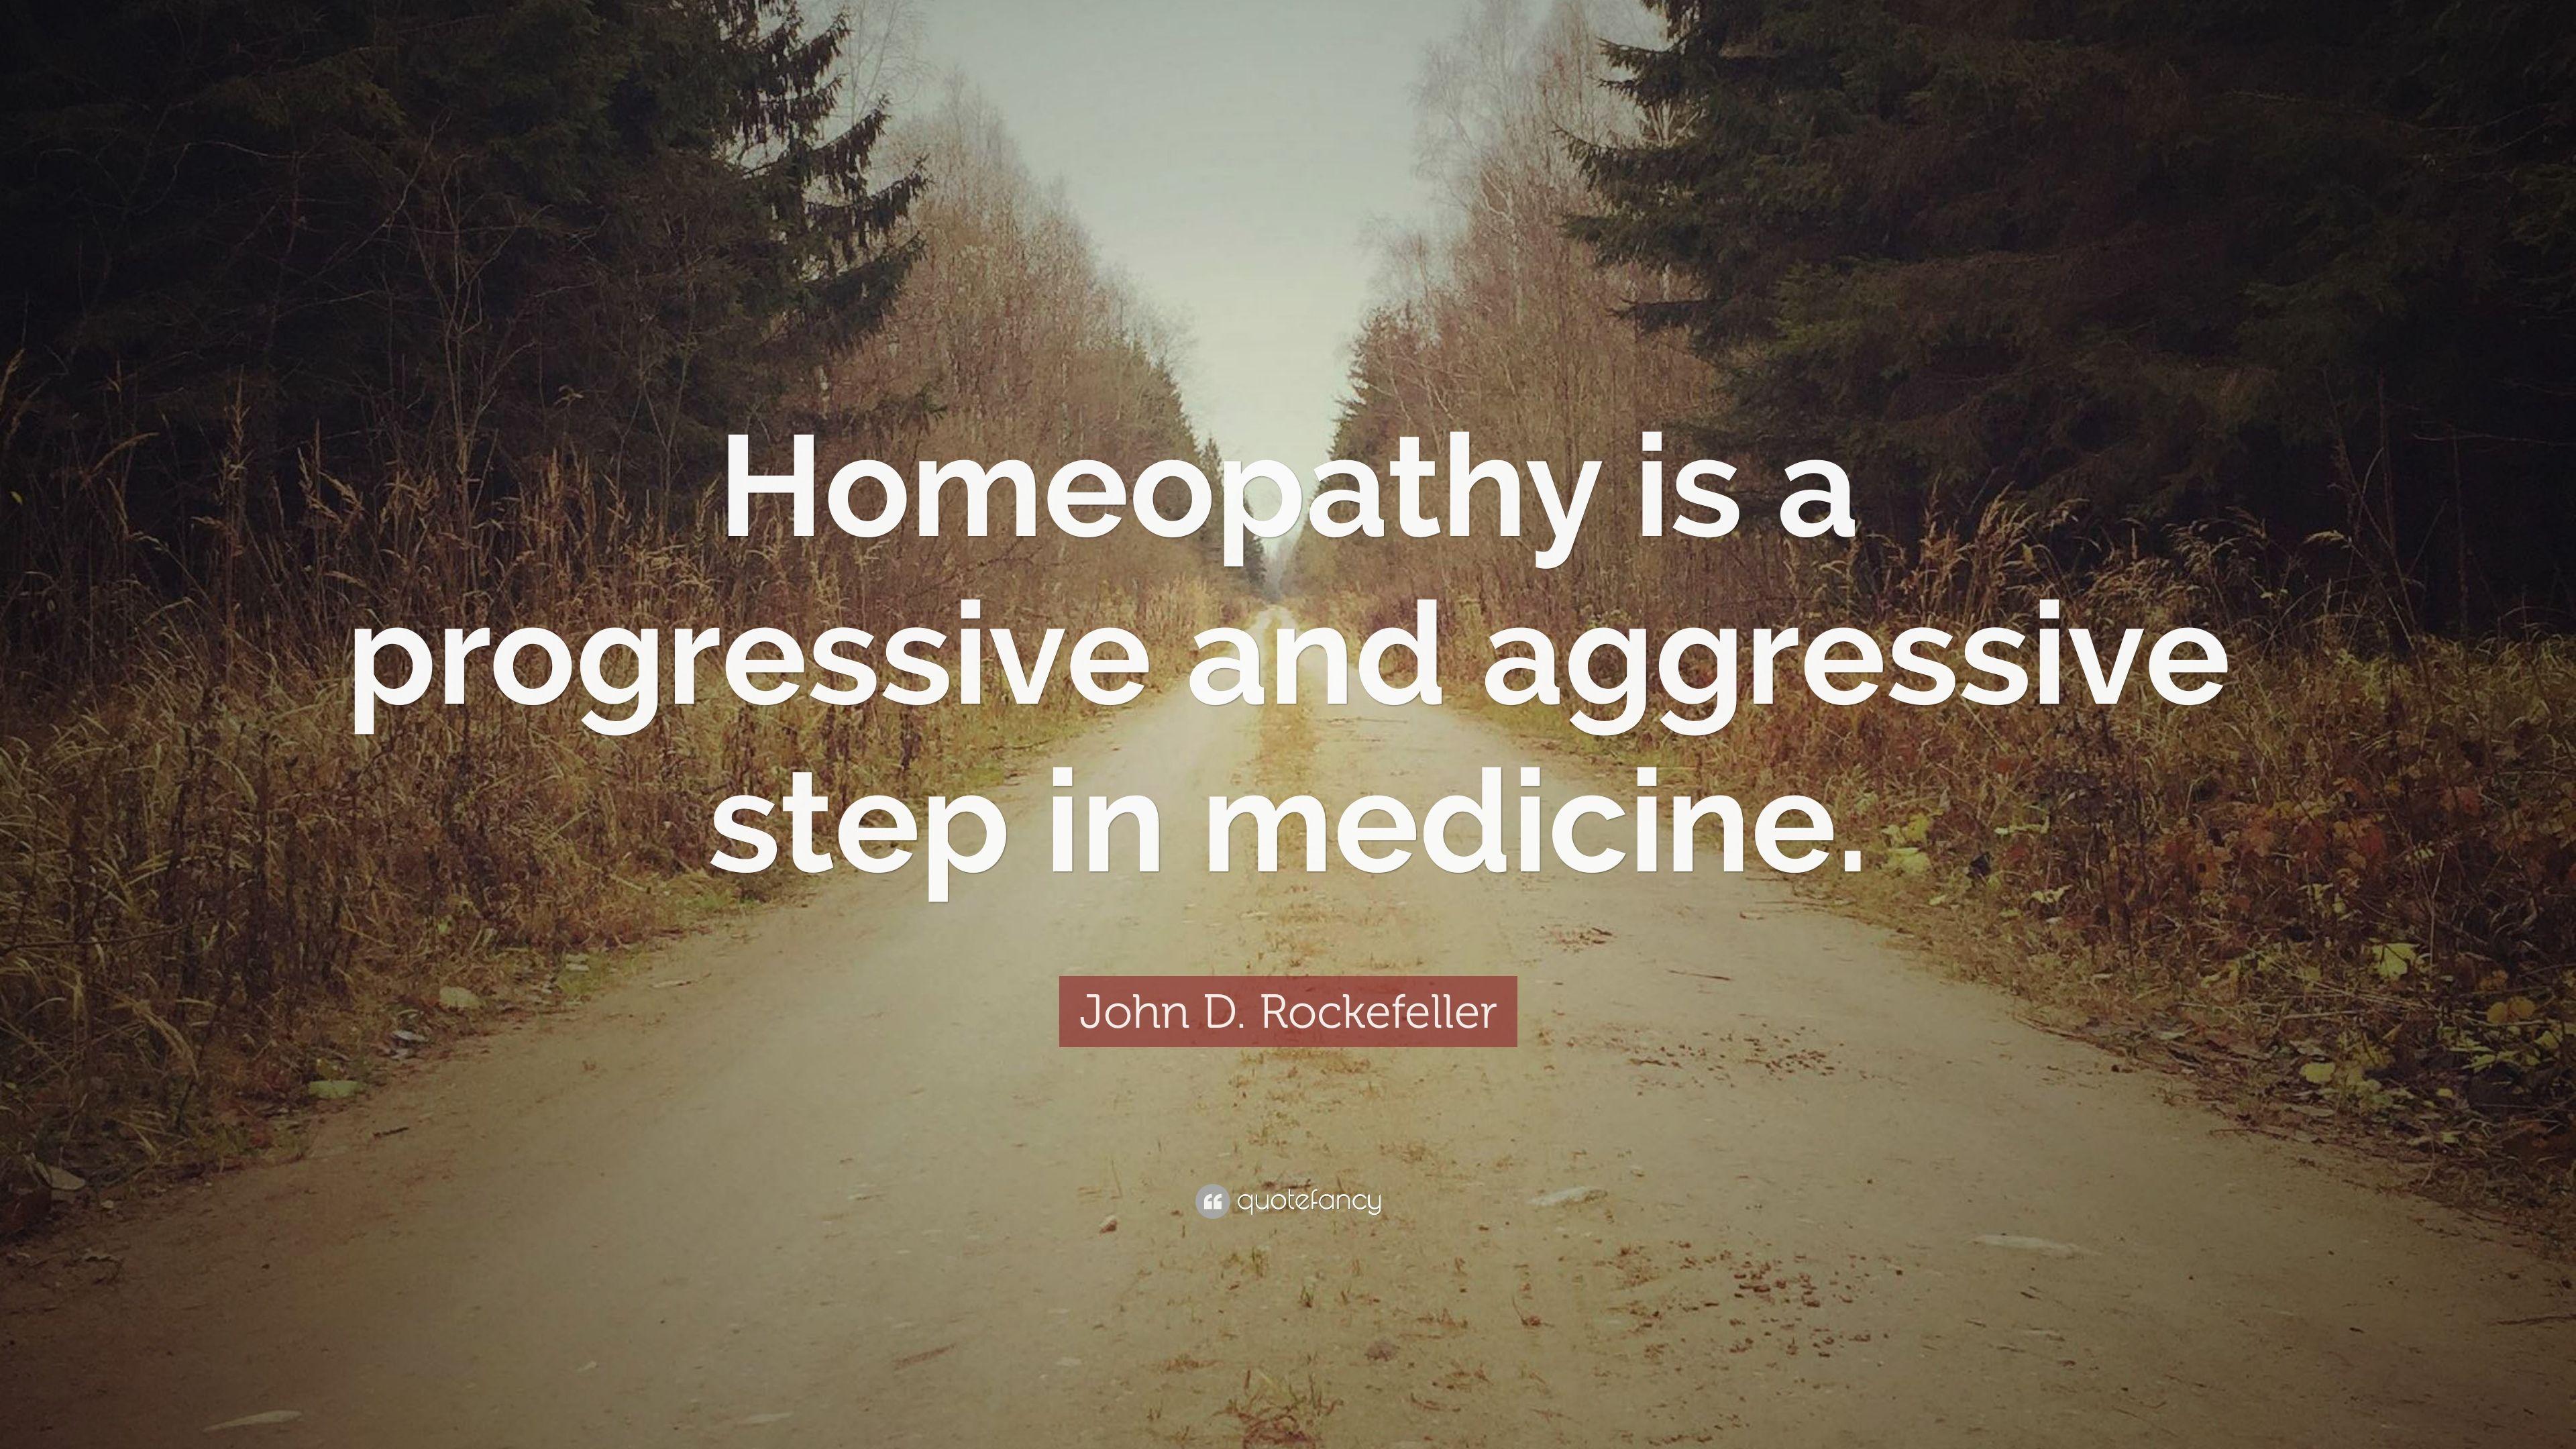 John D. Rockefeller Quote: “Homeopathy is a progressive